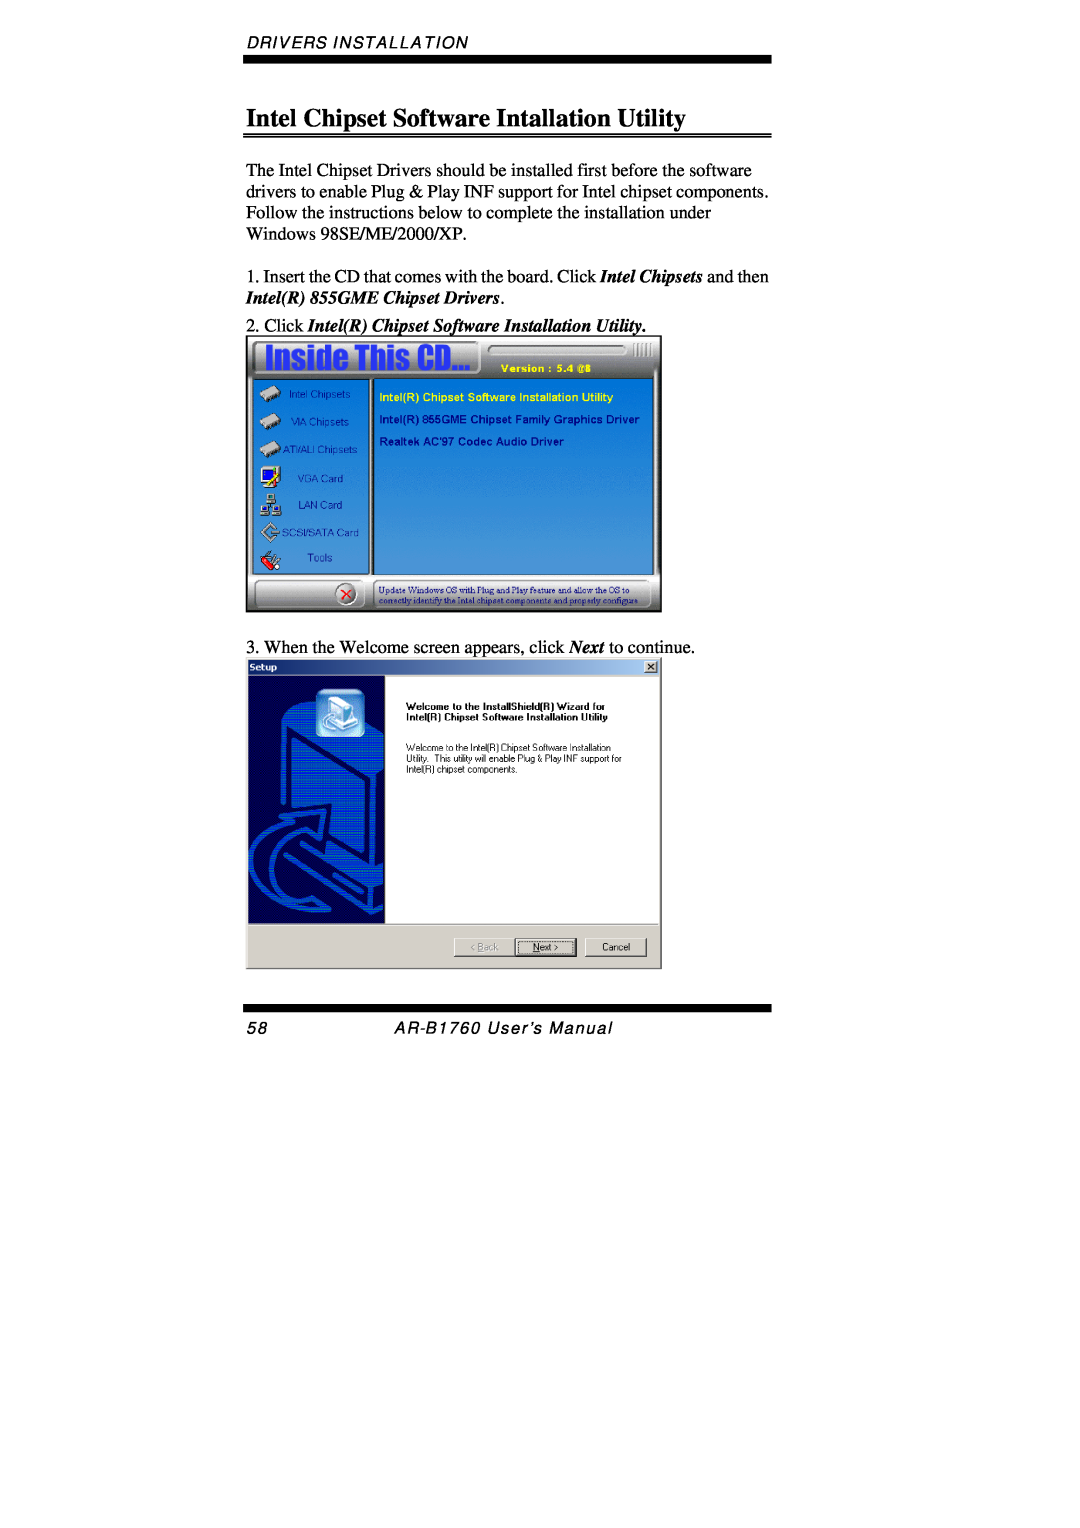 Intel AR-B1760 user manual Intel Chipset Software Intallation Utility, Drivers Installation 